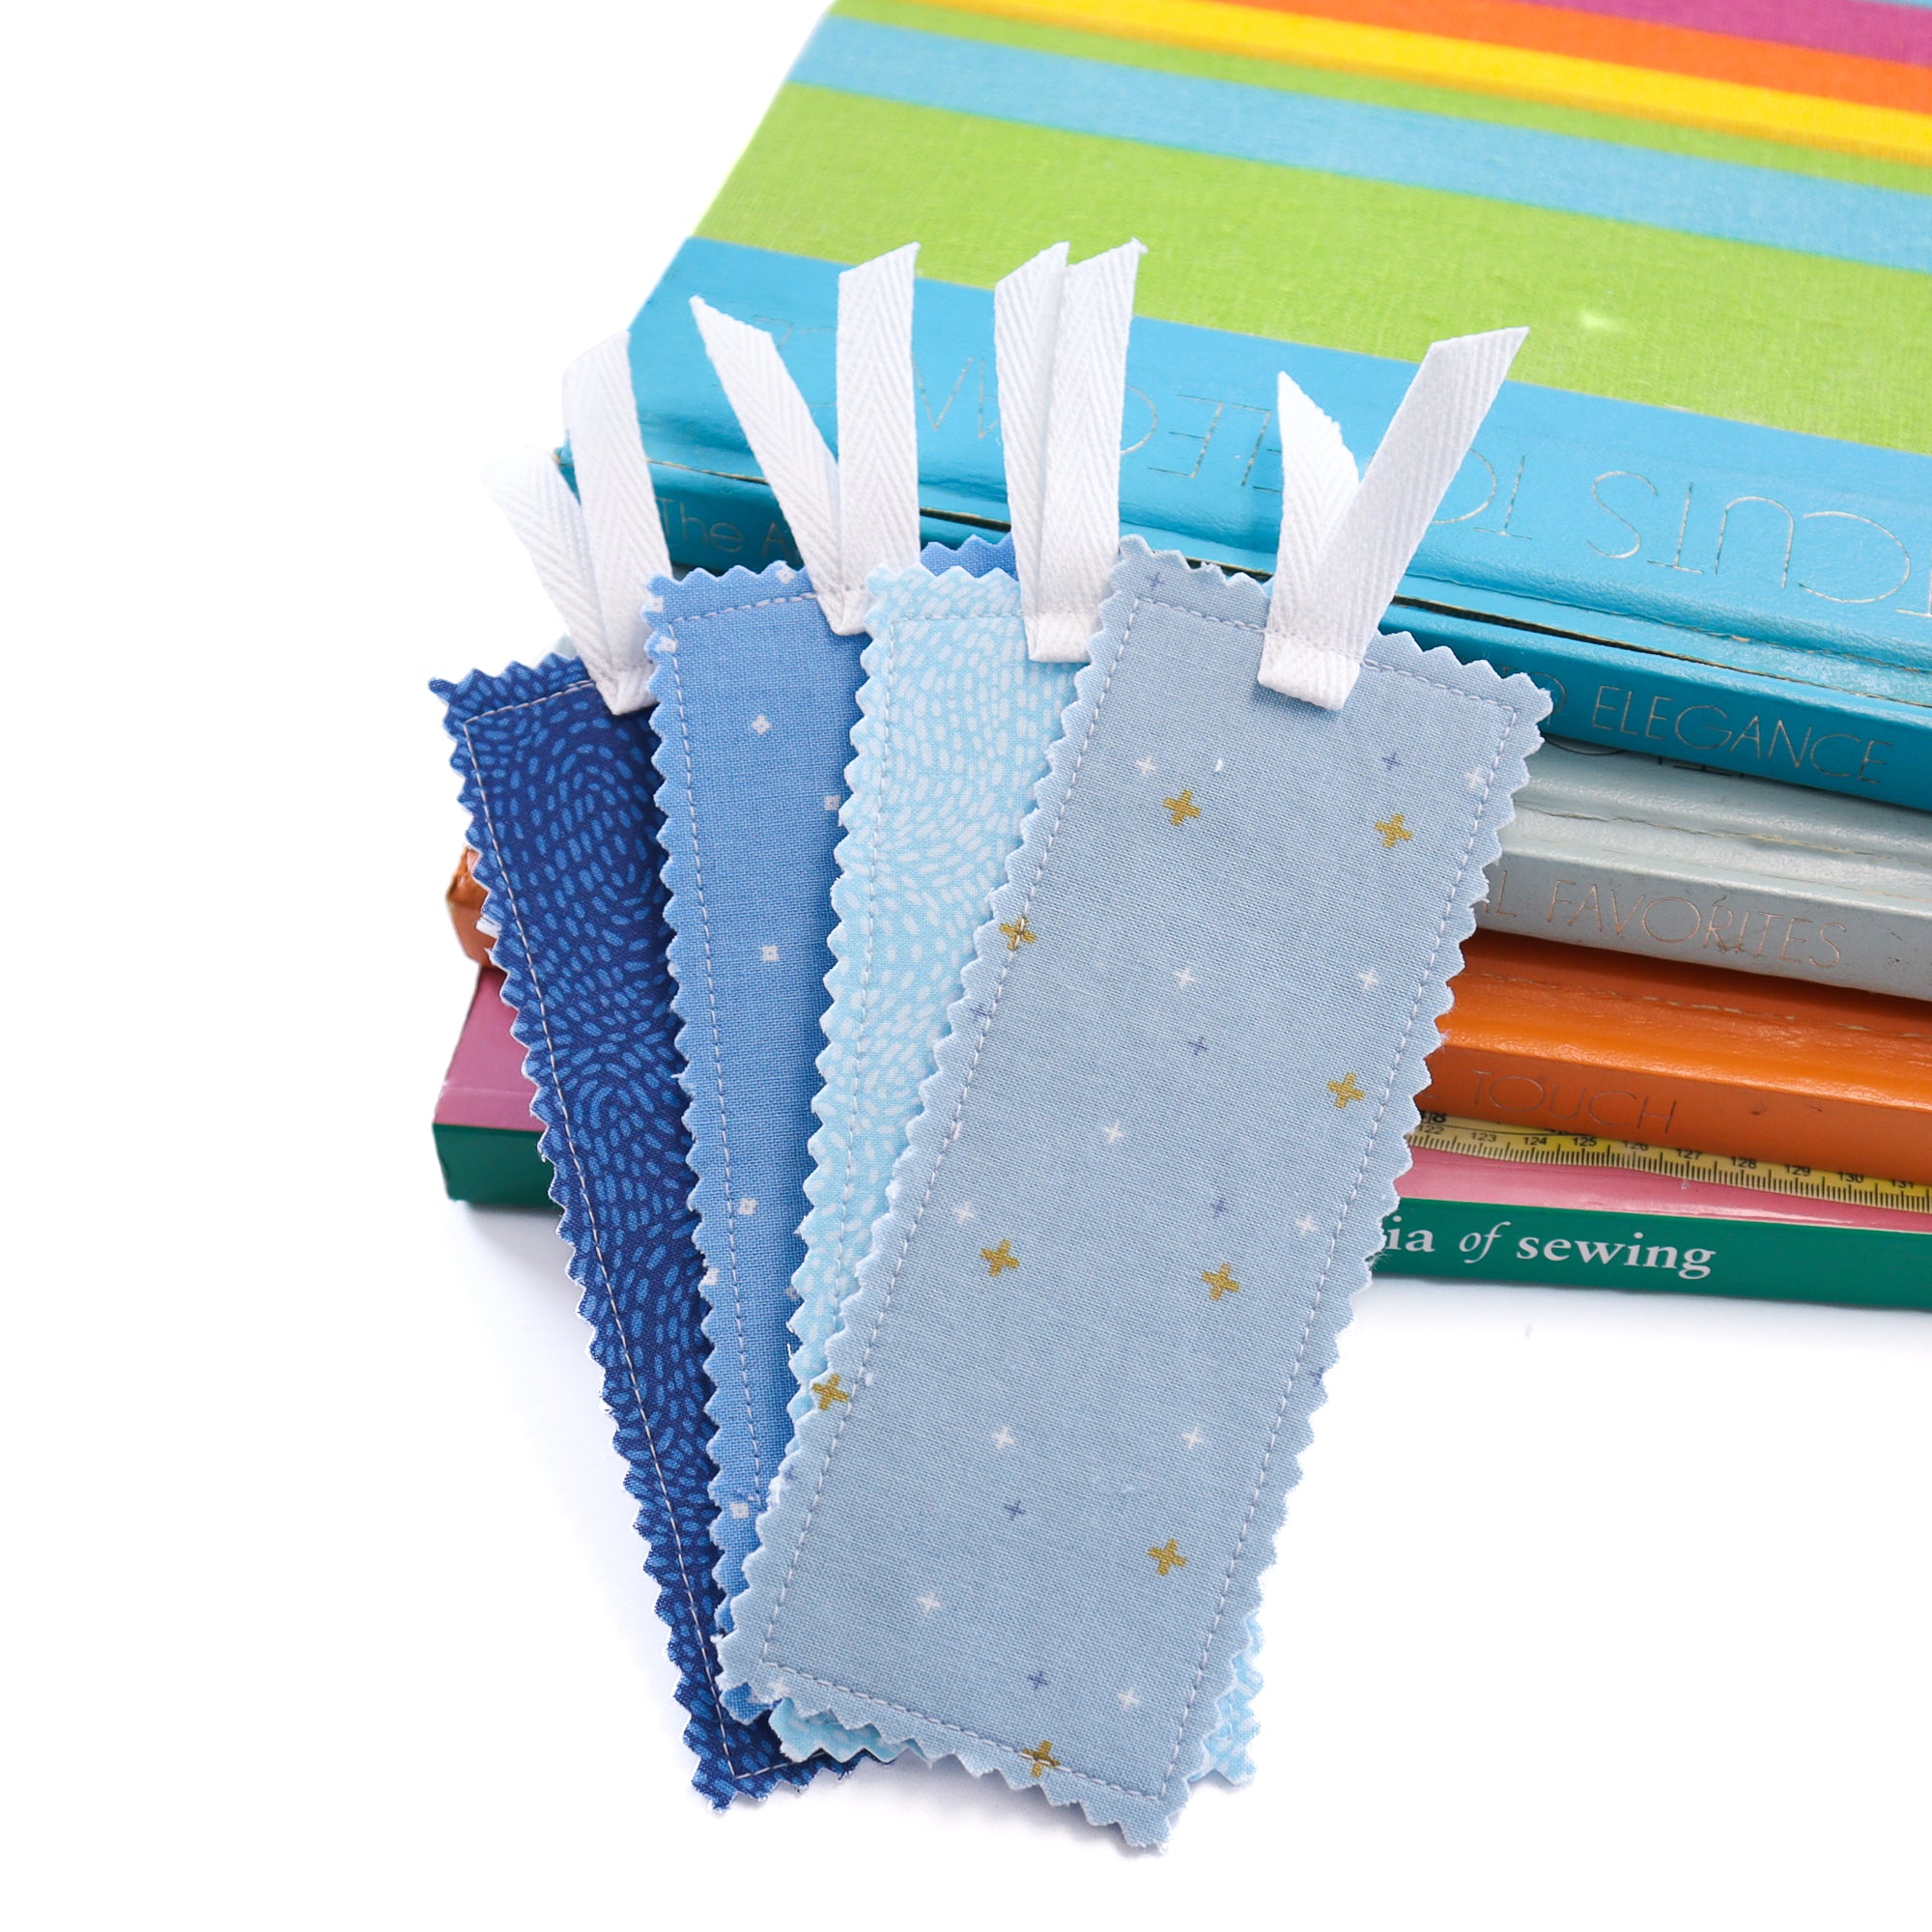 Bookmark Sewing Kit - Blue